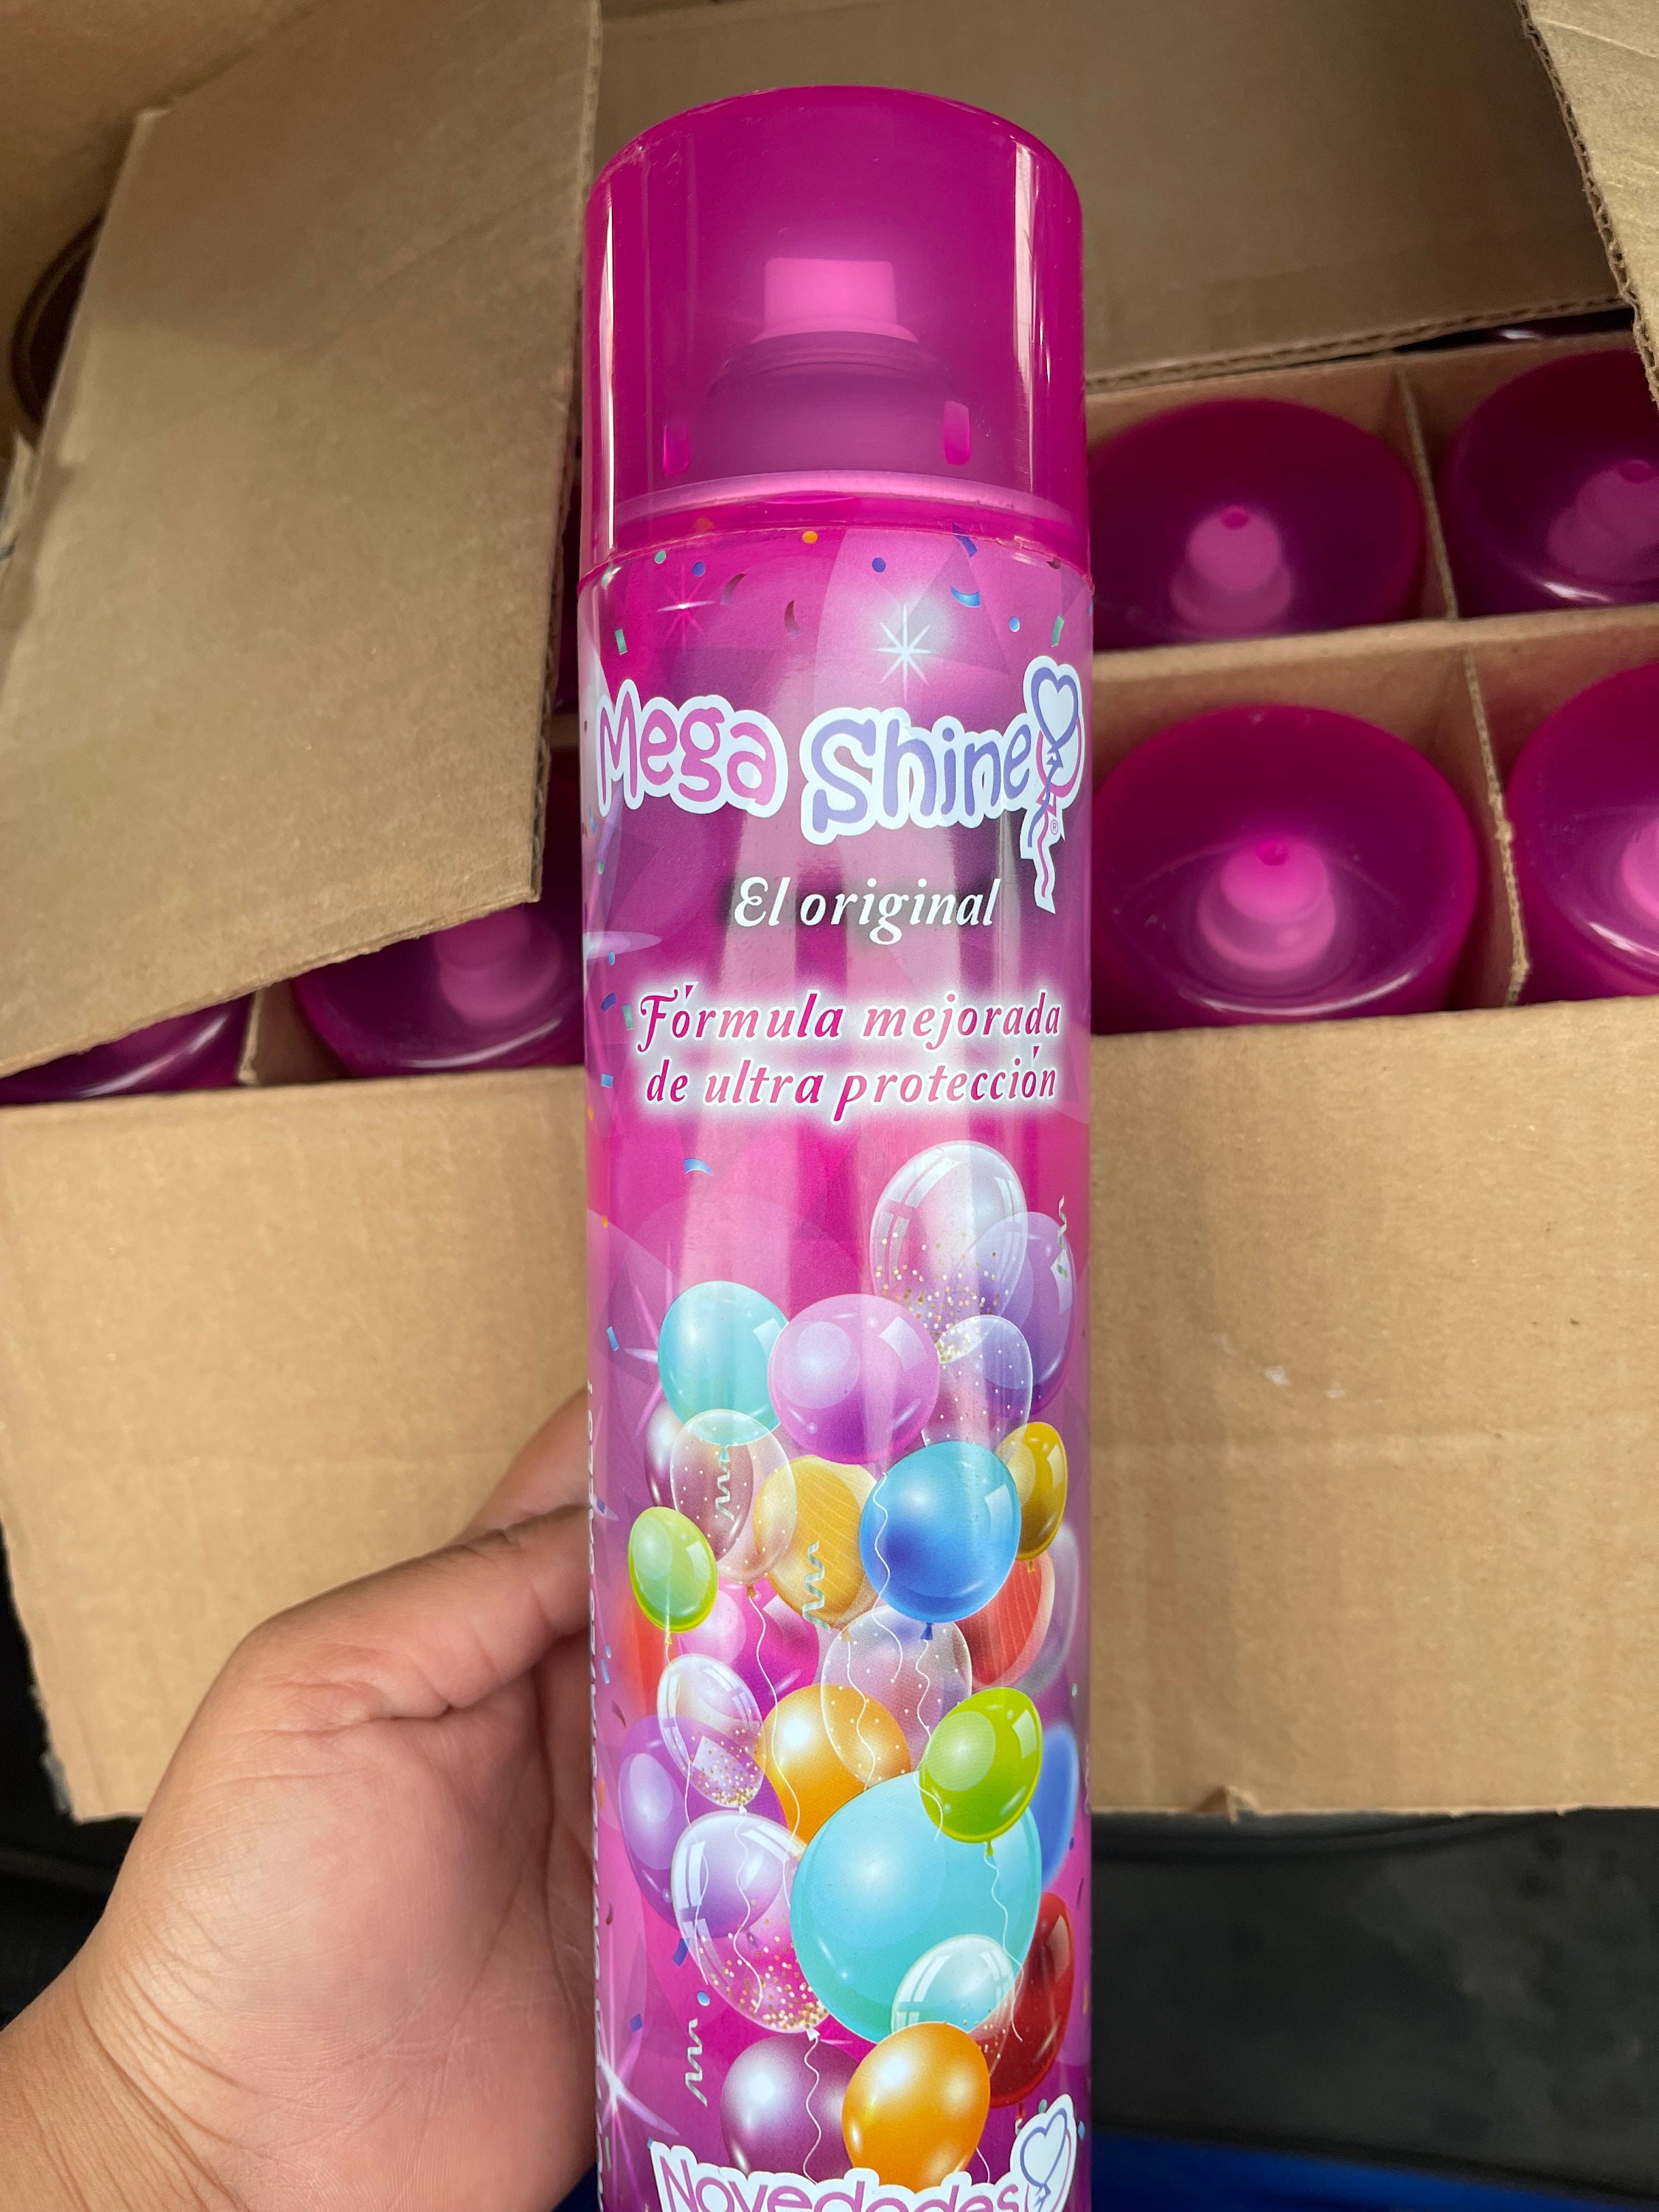 Balloon Brite - High Shine Spray for Latex Balloons - Get a Hi Gloss Finish